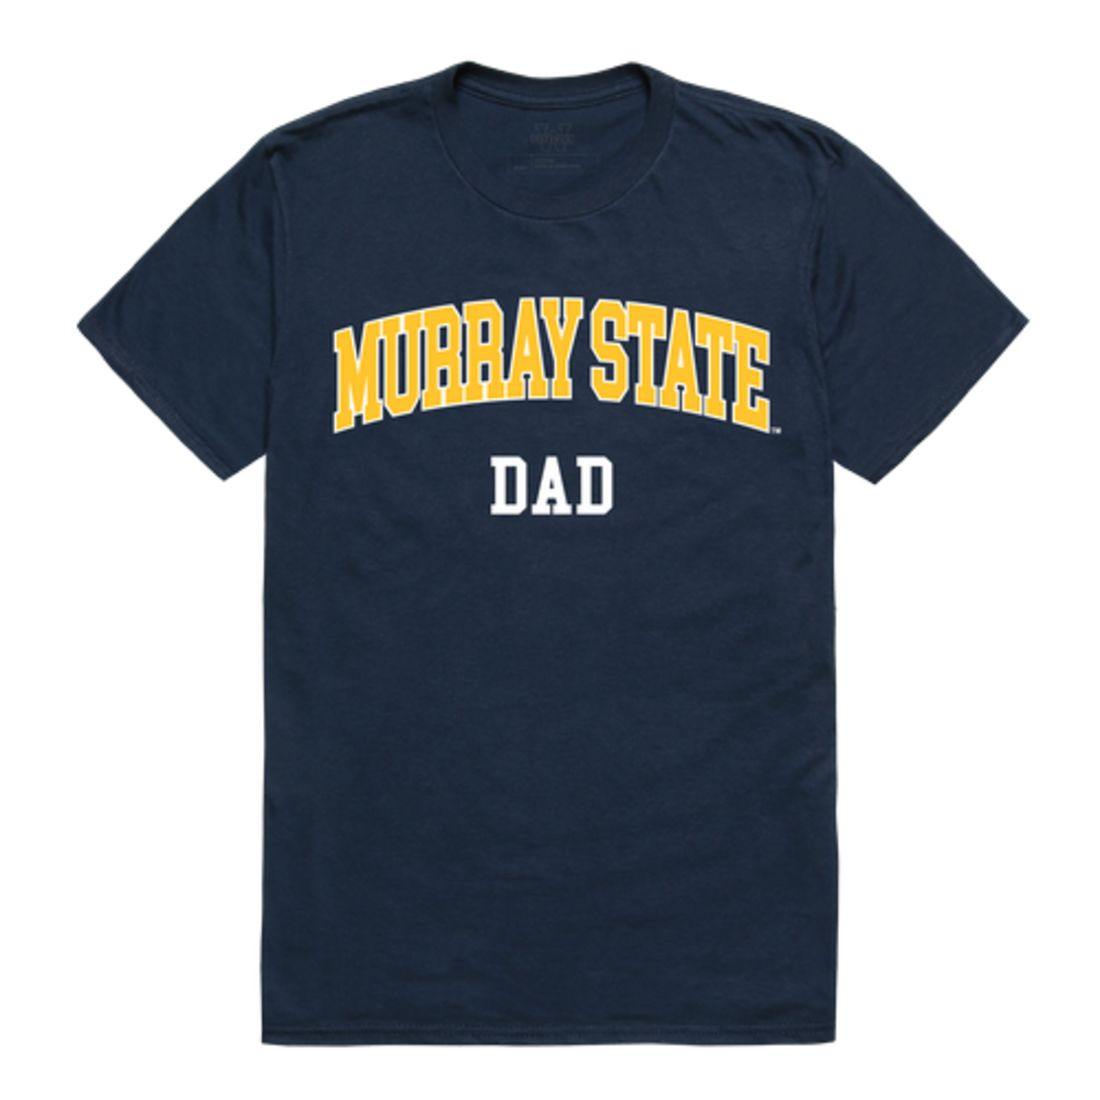 MSU Murray State University Racers College Dad T-Shirt-Campus-Wardrobe